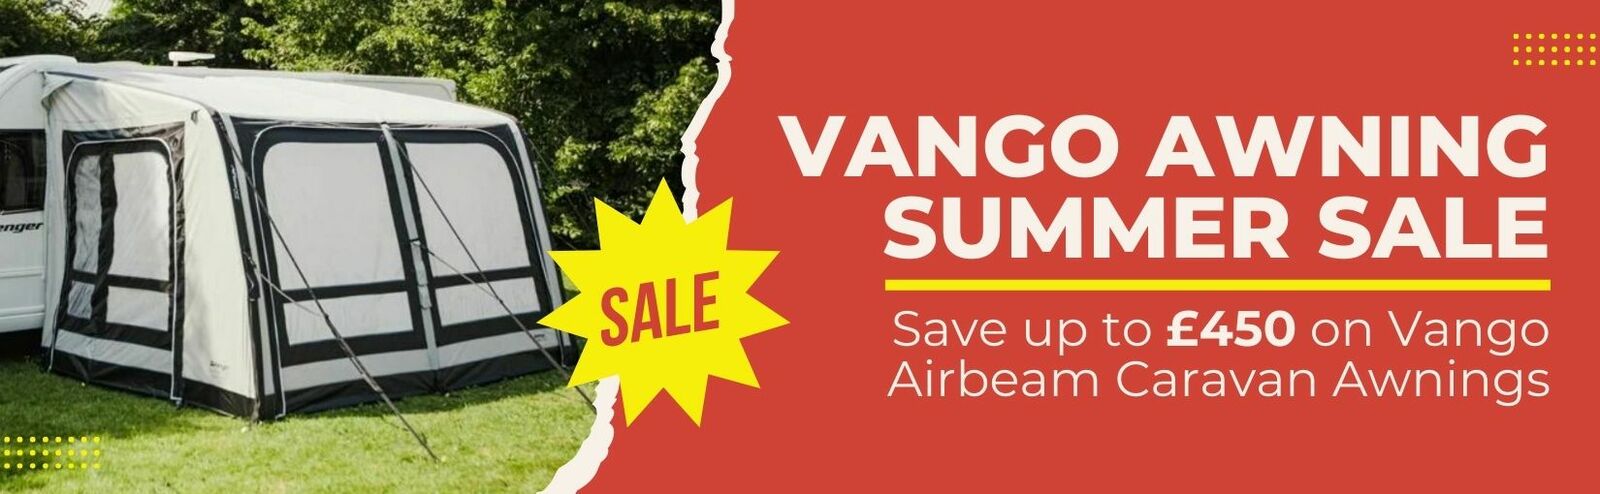 Vango Summer Awning Sale Featured Banner